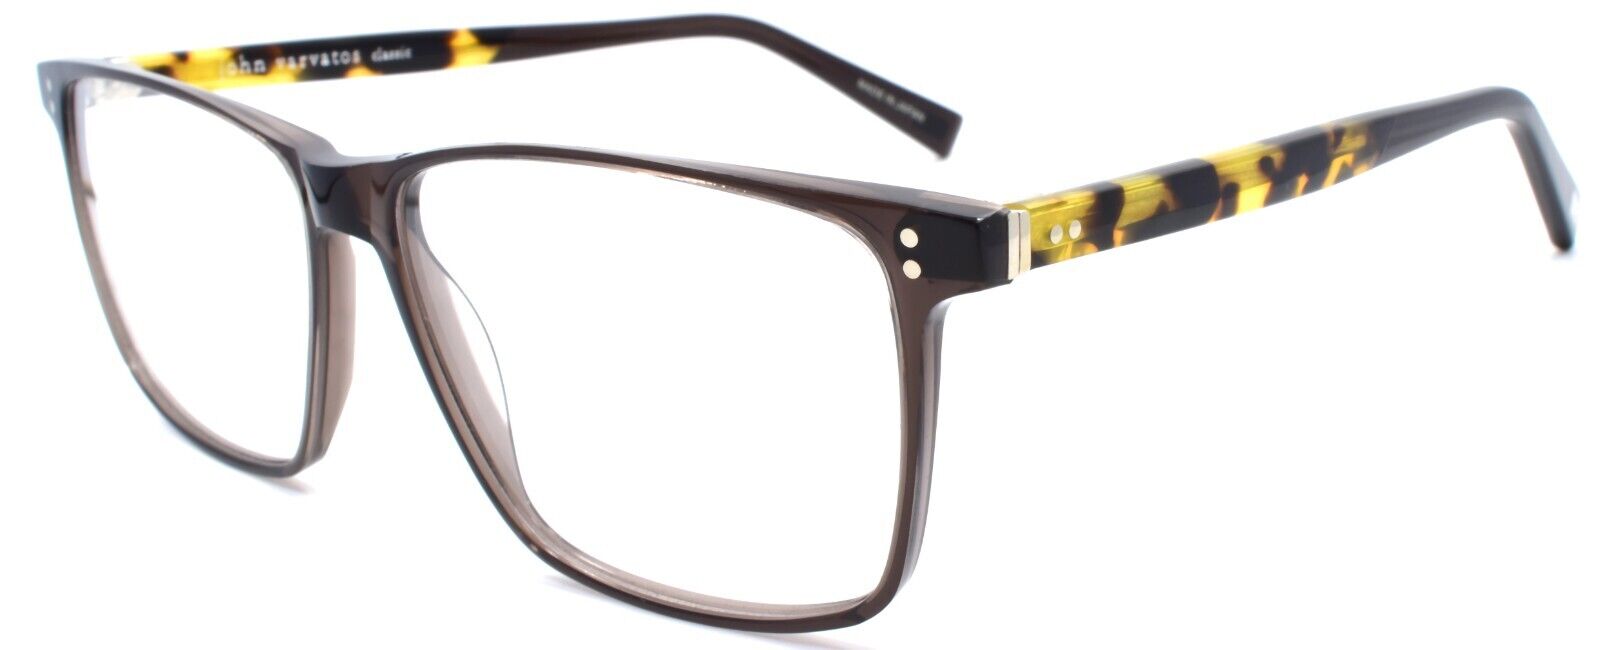 1-John Varvatos V380 Men's Eyeglasses Frames 57-14-145 Smoke Japan-751286324228-IKSpecs